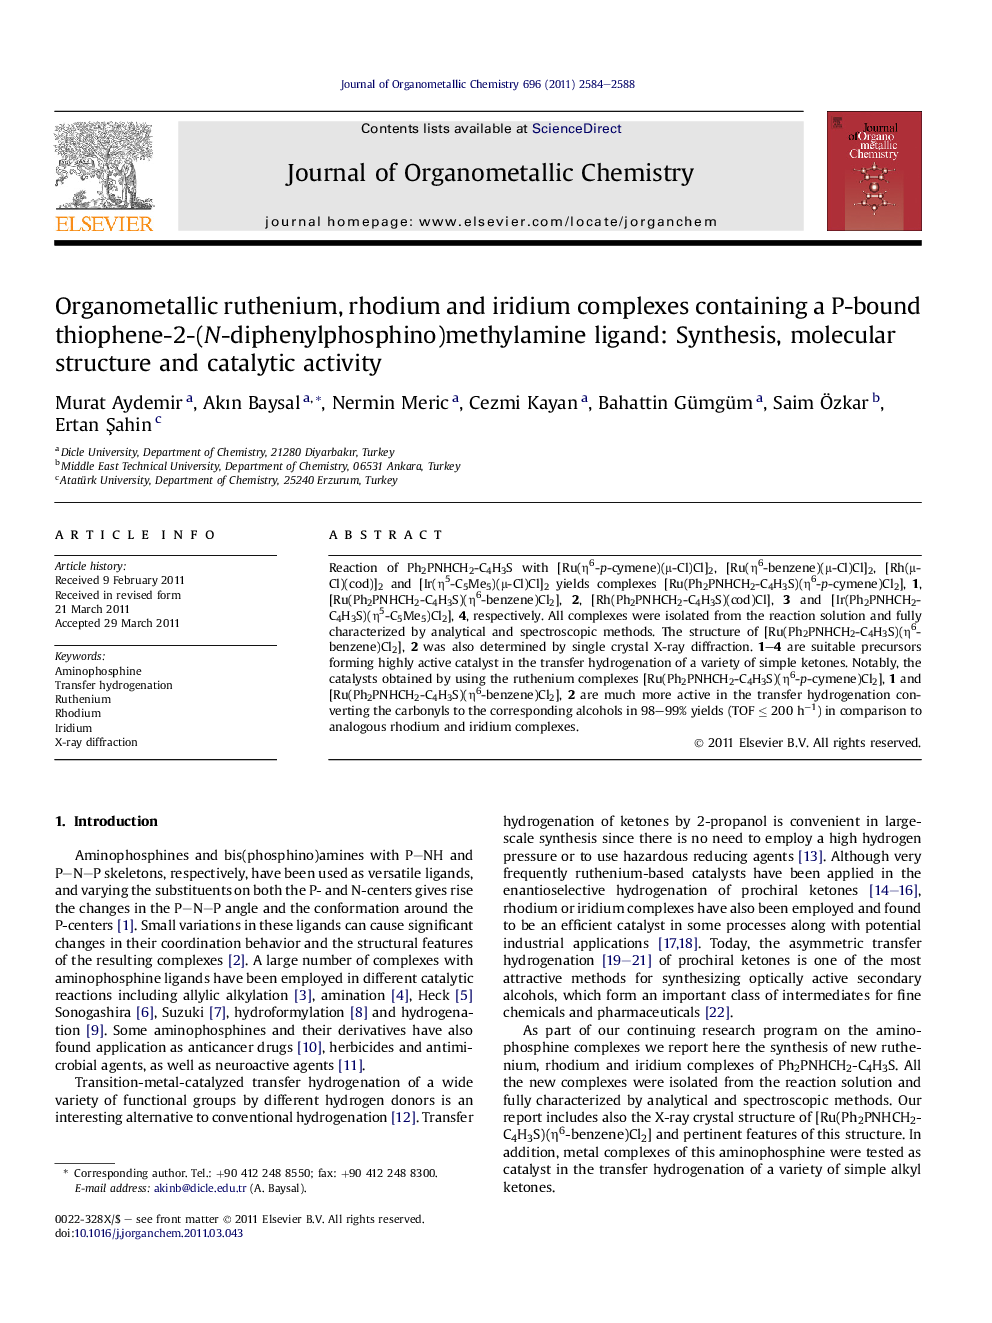 Organometallic ruthenium, rhodium and iridium complexes containing a P-bound thiophene-2-(N-diphenylphosphino)methylamine ligand: Synthesis, molecular structure and catalytic activity